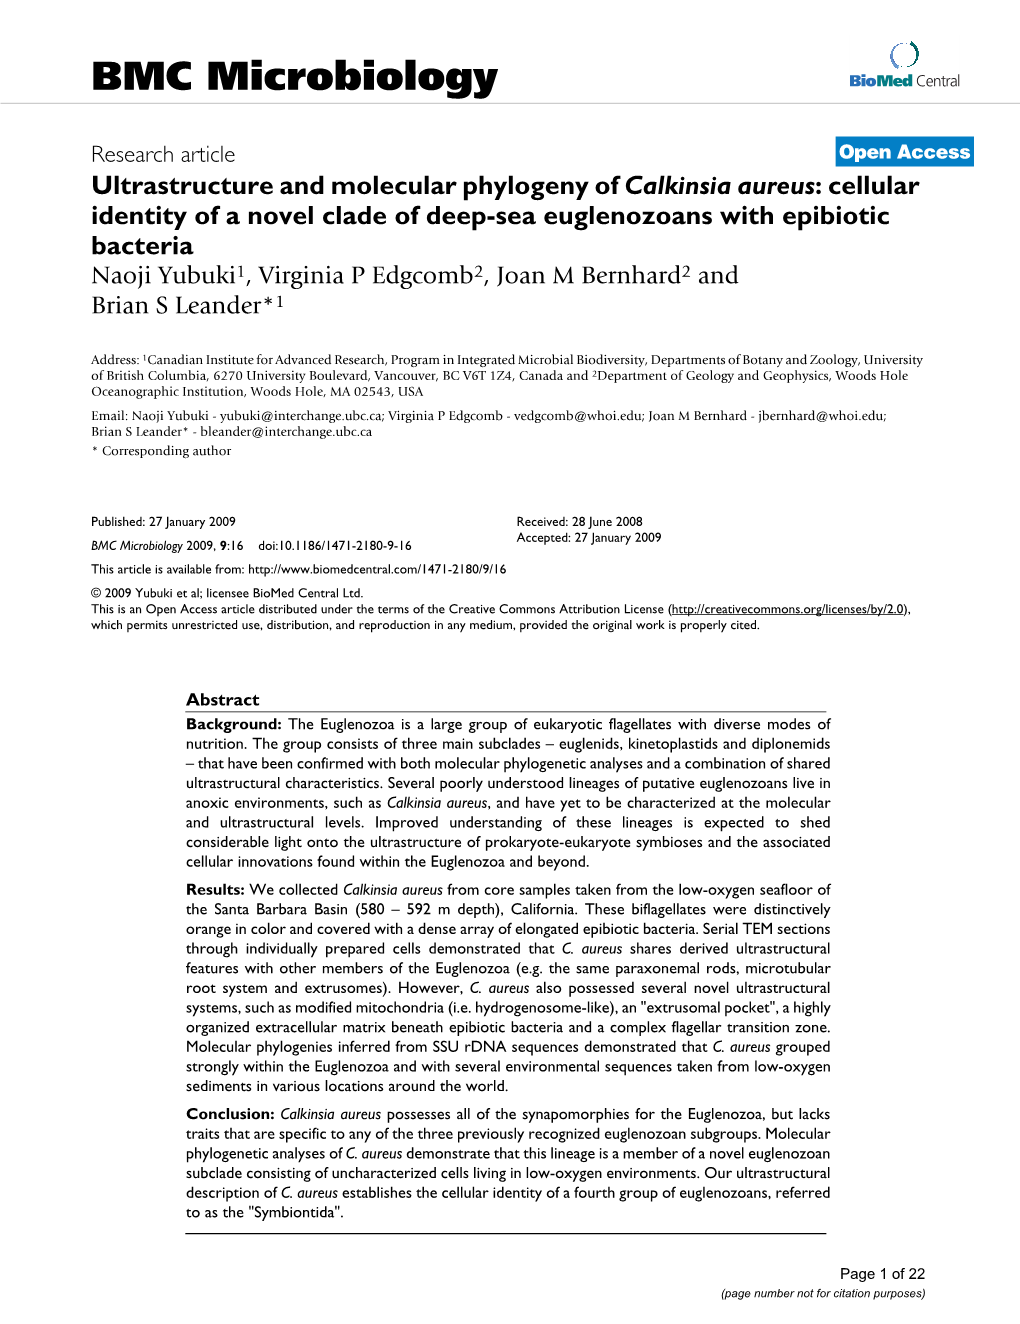 Ultrastructure and Molecular Phylogeny of Calkinsia Aureus